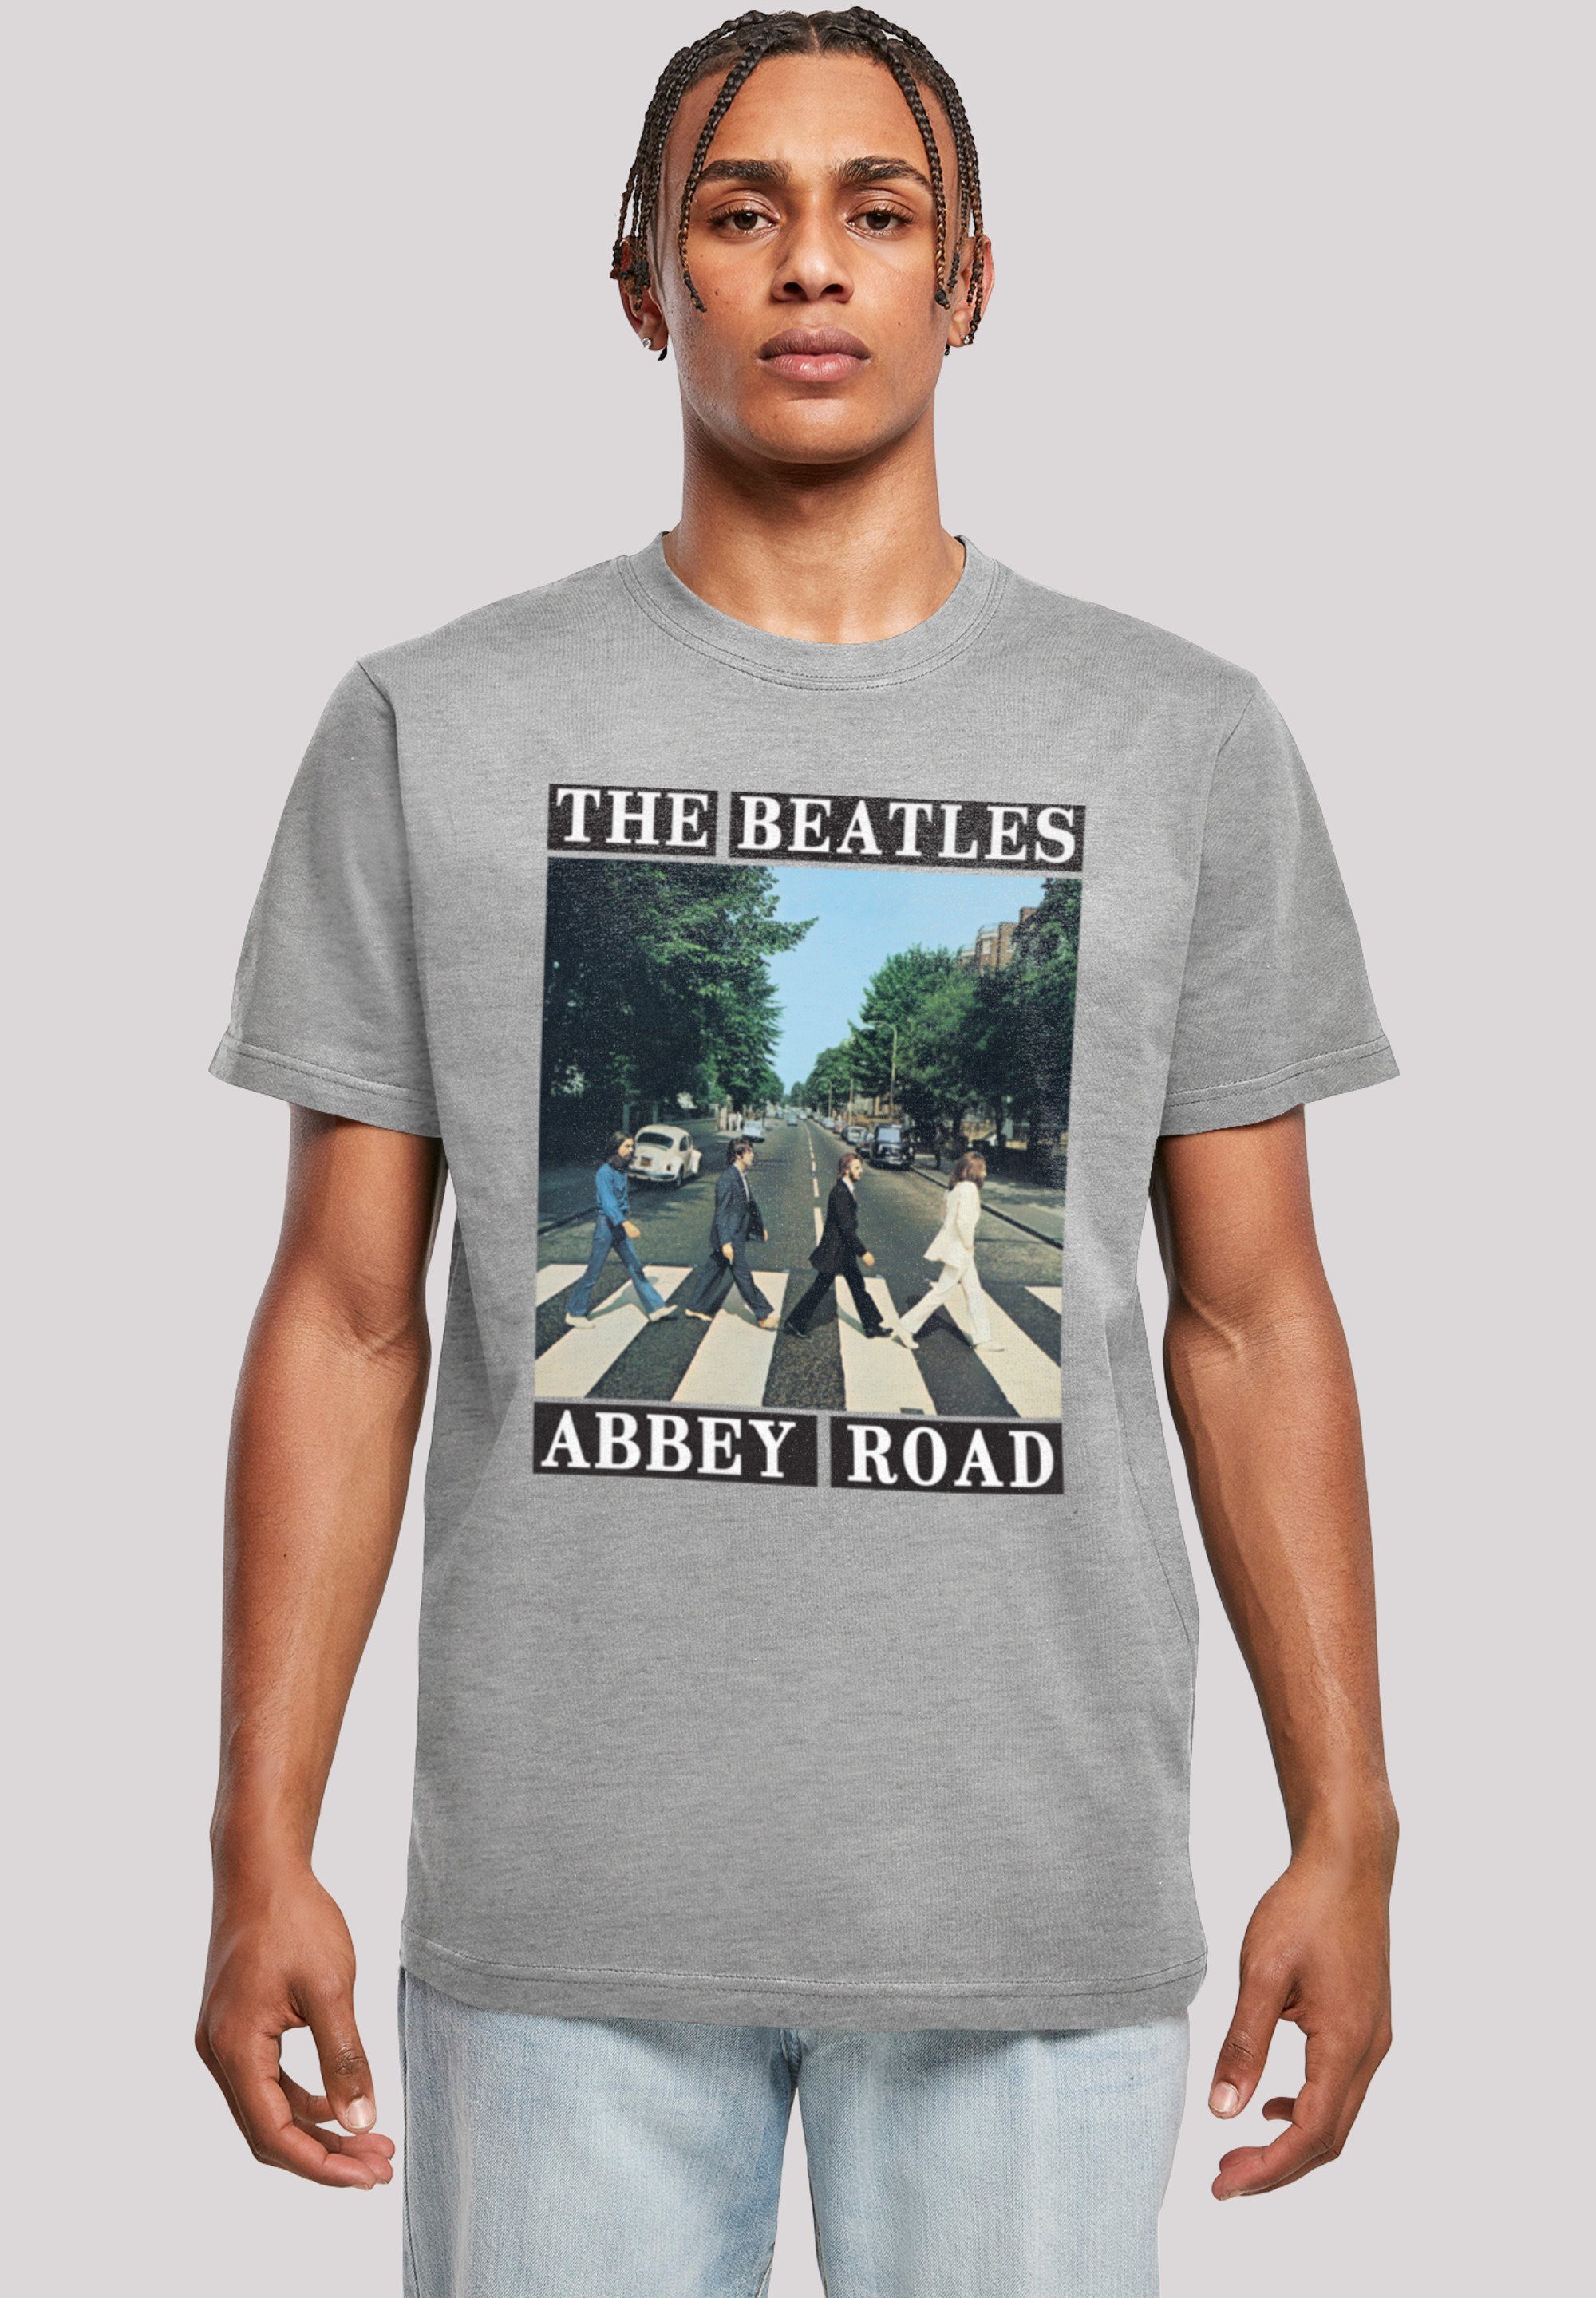 F4NT4STIC T-Shirt The Beatles Band Abbey Road Print, Sehr weicher  Baumwollstoff mit hohem Tragekomfort | T-Shirts